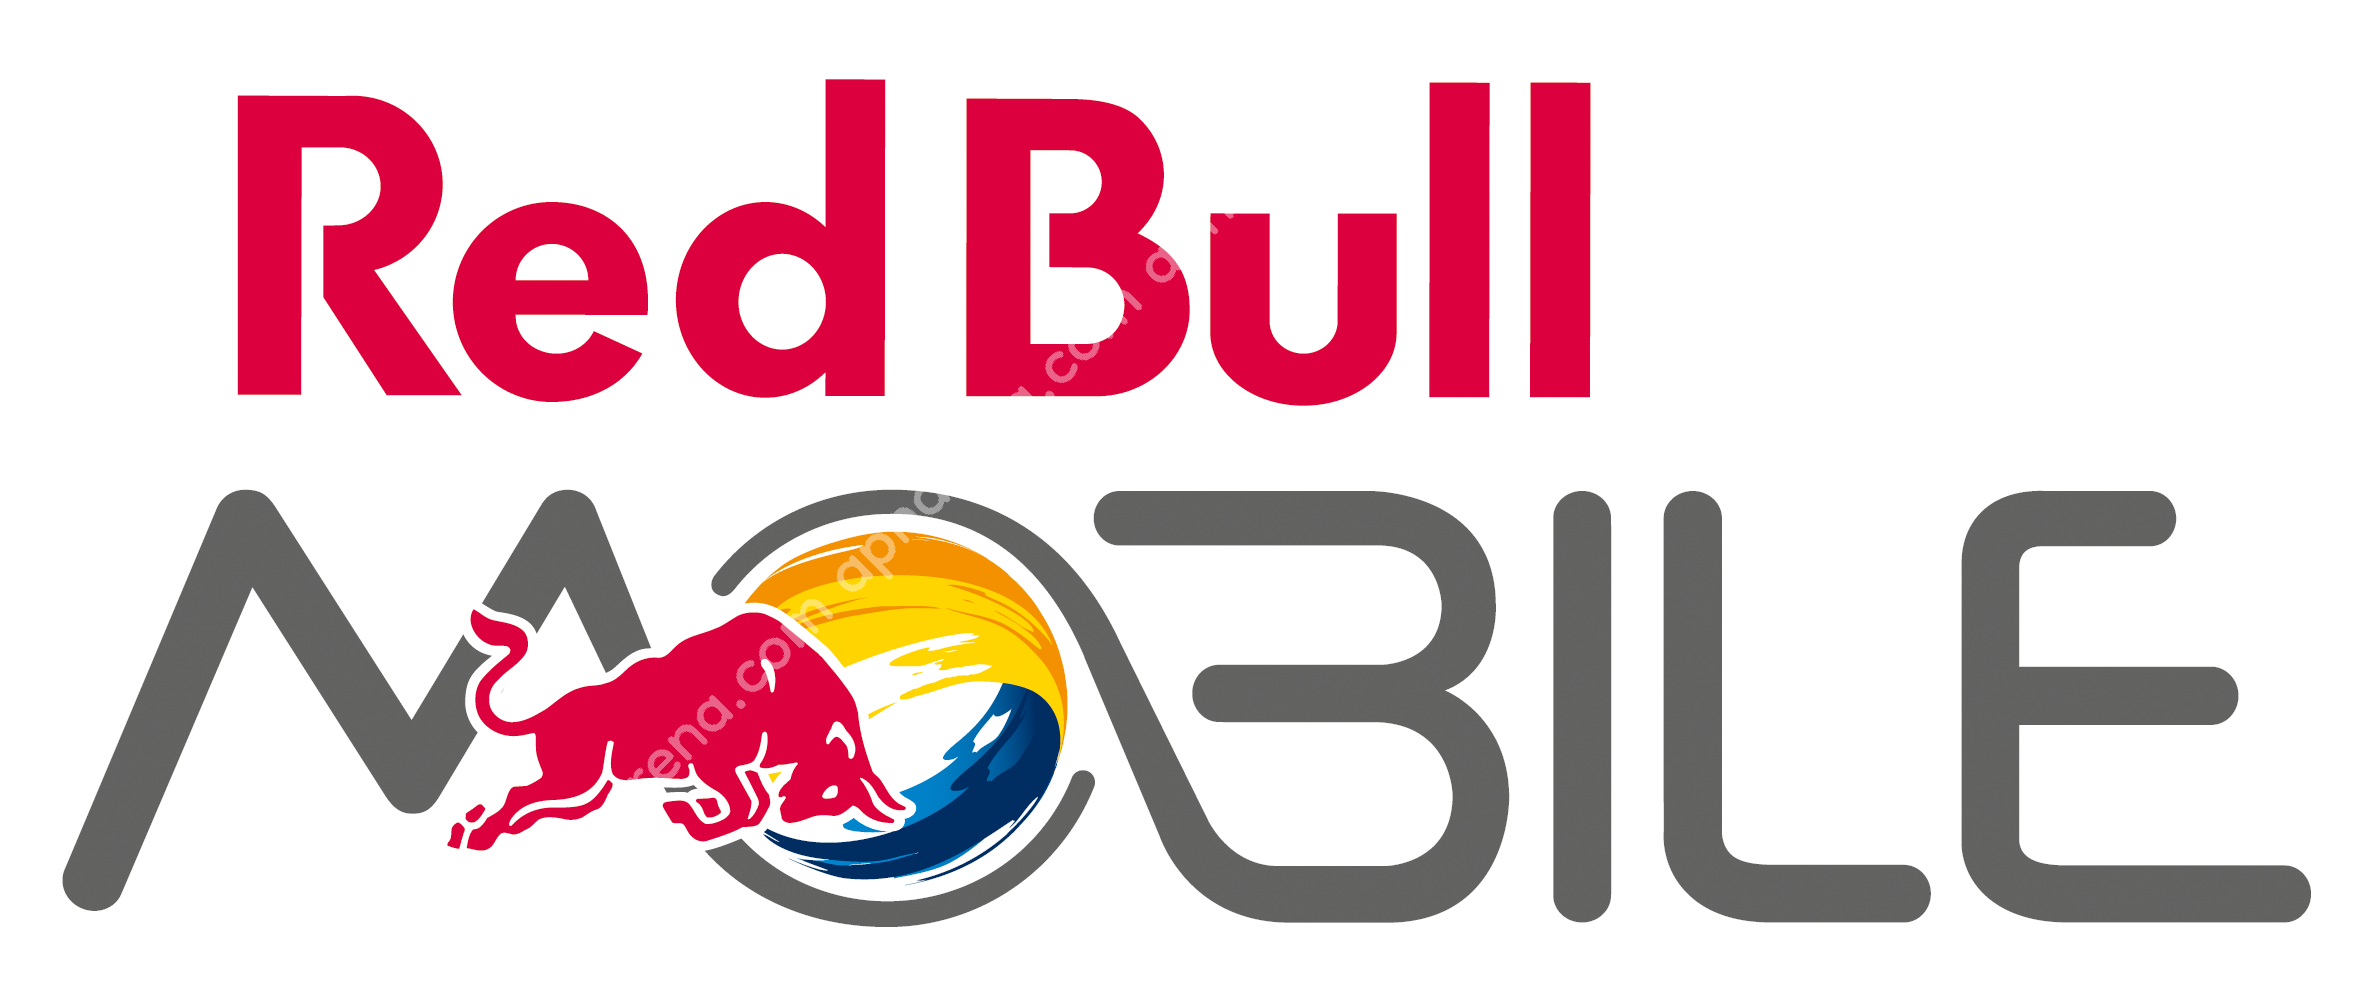 Red Bull Mobile Australia APN Internet Settings Android iPhone